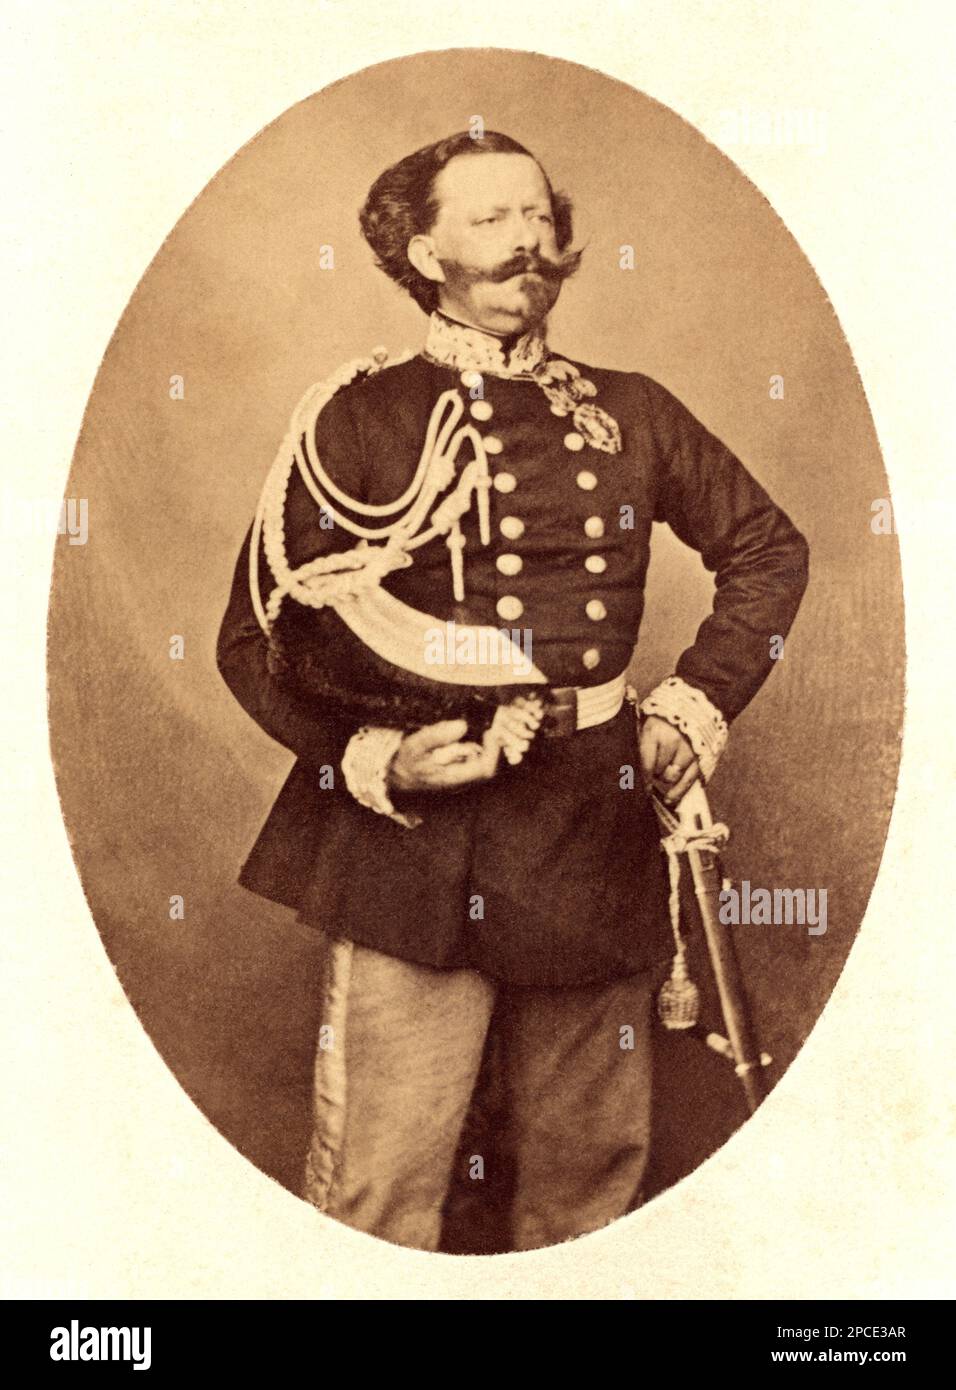 1870 Ca, Italien : der italienische König VITTORIO EMANUELE II di SAVOIA ( 1820 - 1888 ). Foto von DISDERI und C. , Paris - Italien - ITALIA - CASA SAVOIA - REALI - Nobiltà ITALIANA - SAVOY - ADEL - KÖNIGE - GESCHICHTE - FOTOSTORICHE - Könige - nobili - Nobiltà - Portrait - Rituto - Baffi - Schnurrbart - Militäruniform - Divisa uniforme militare - ITALIA ---- Archivio GBB Stockfoto